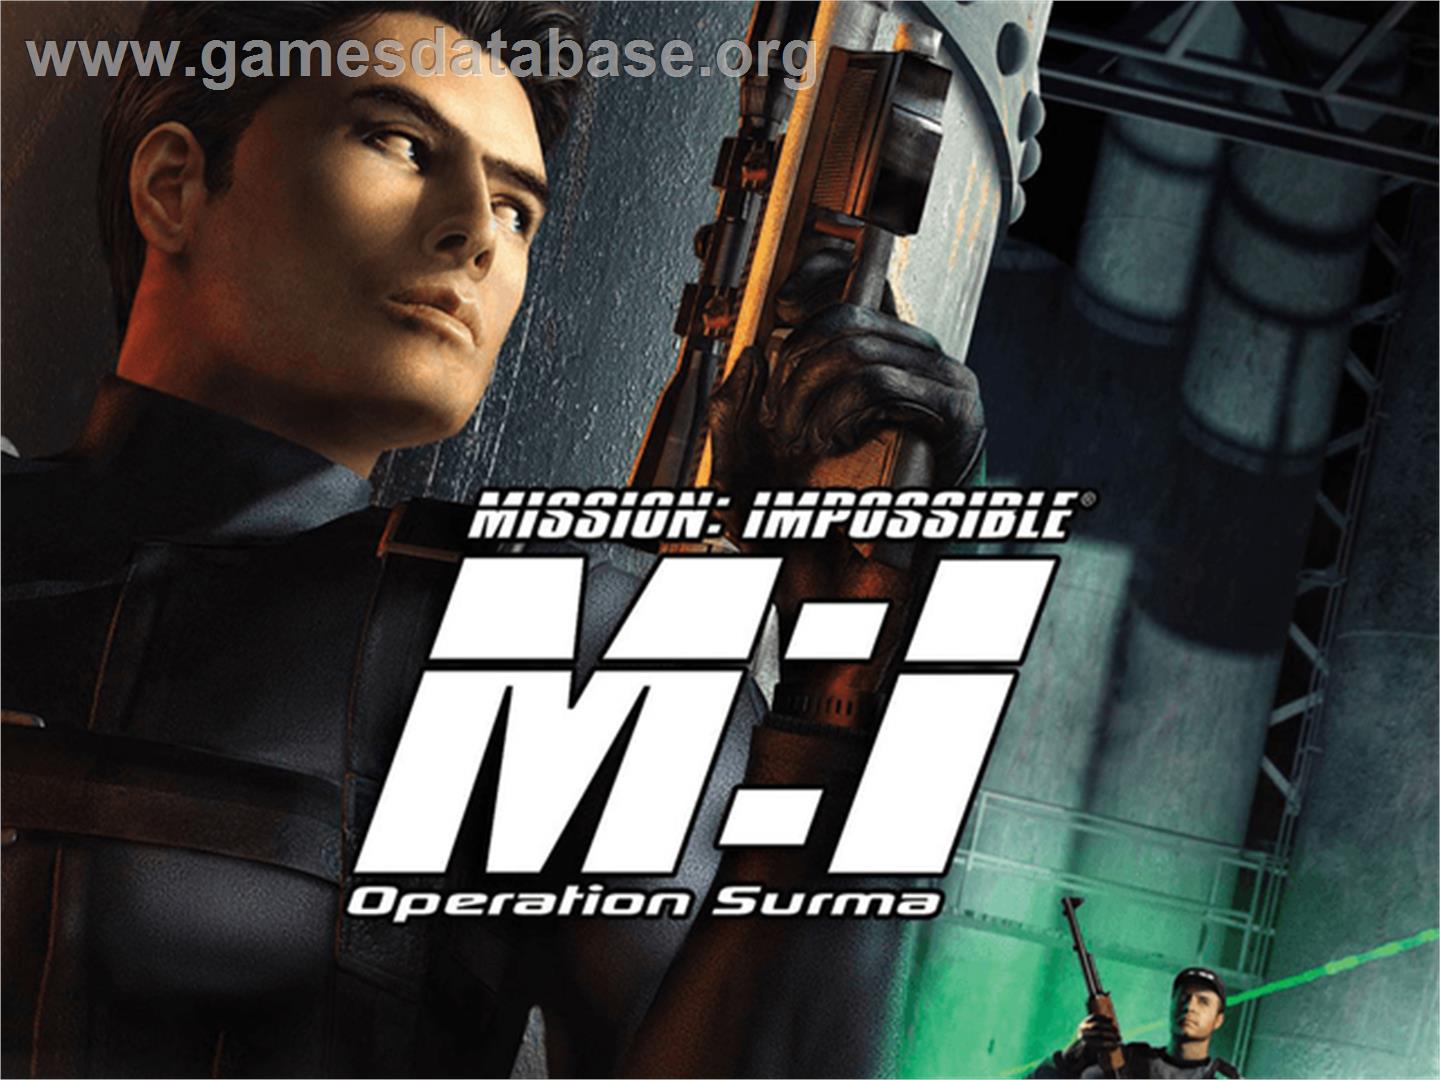 Mission Impossible: Operation Surma - Microsoft Xbox - Artwork - Title Screen